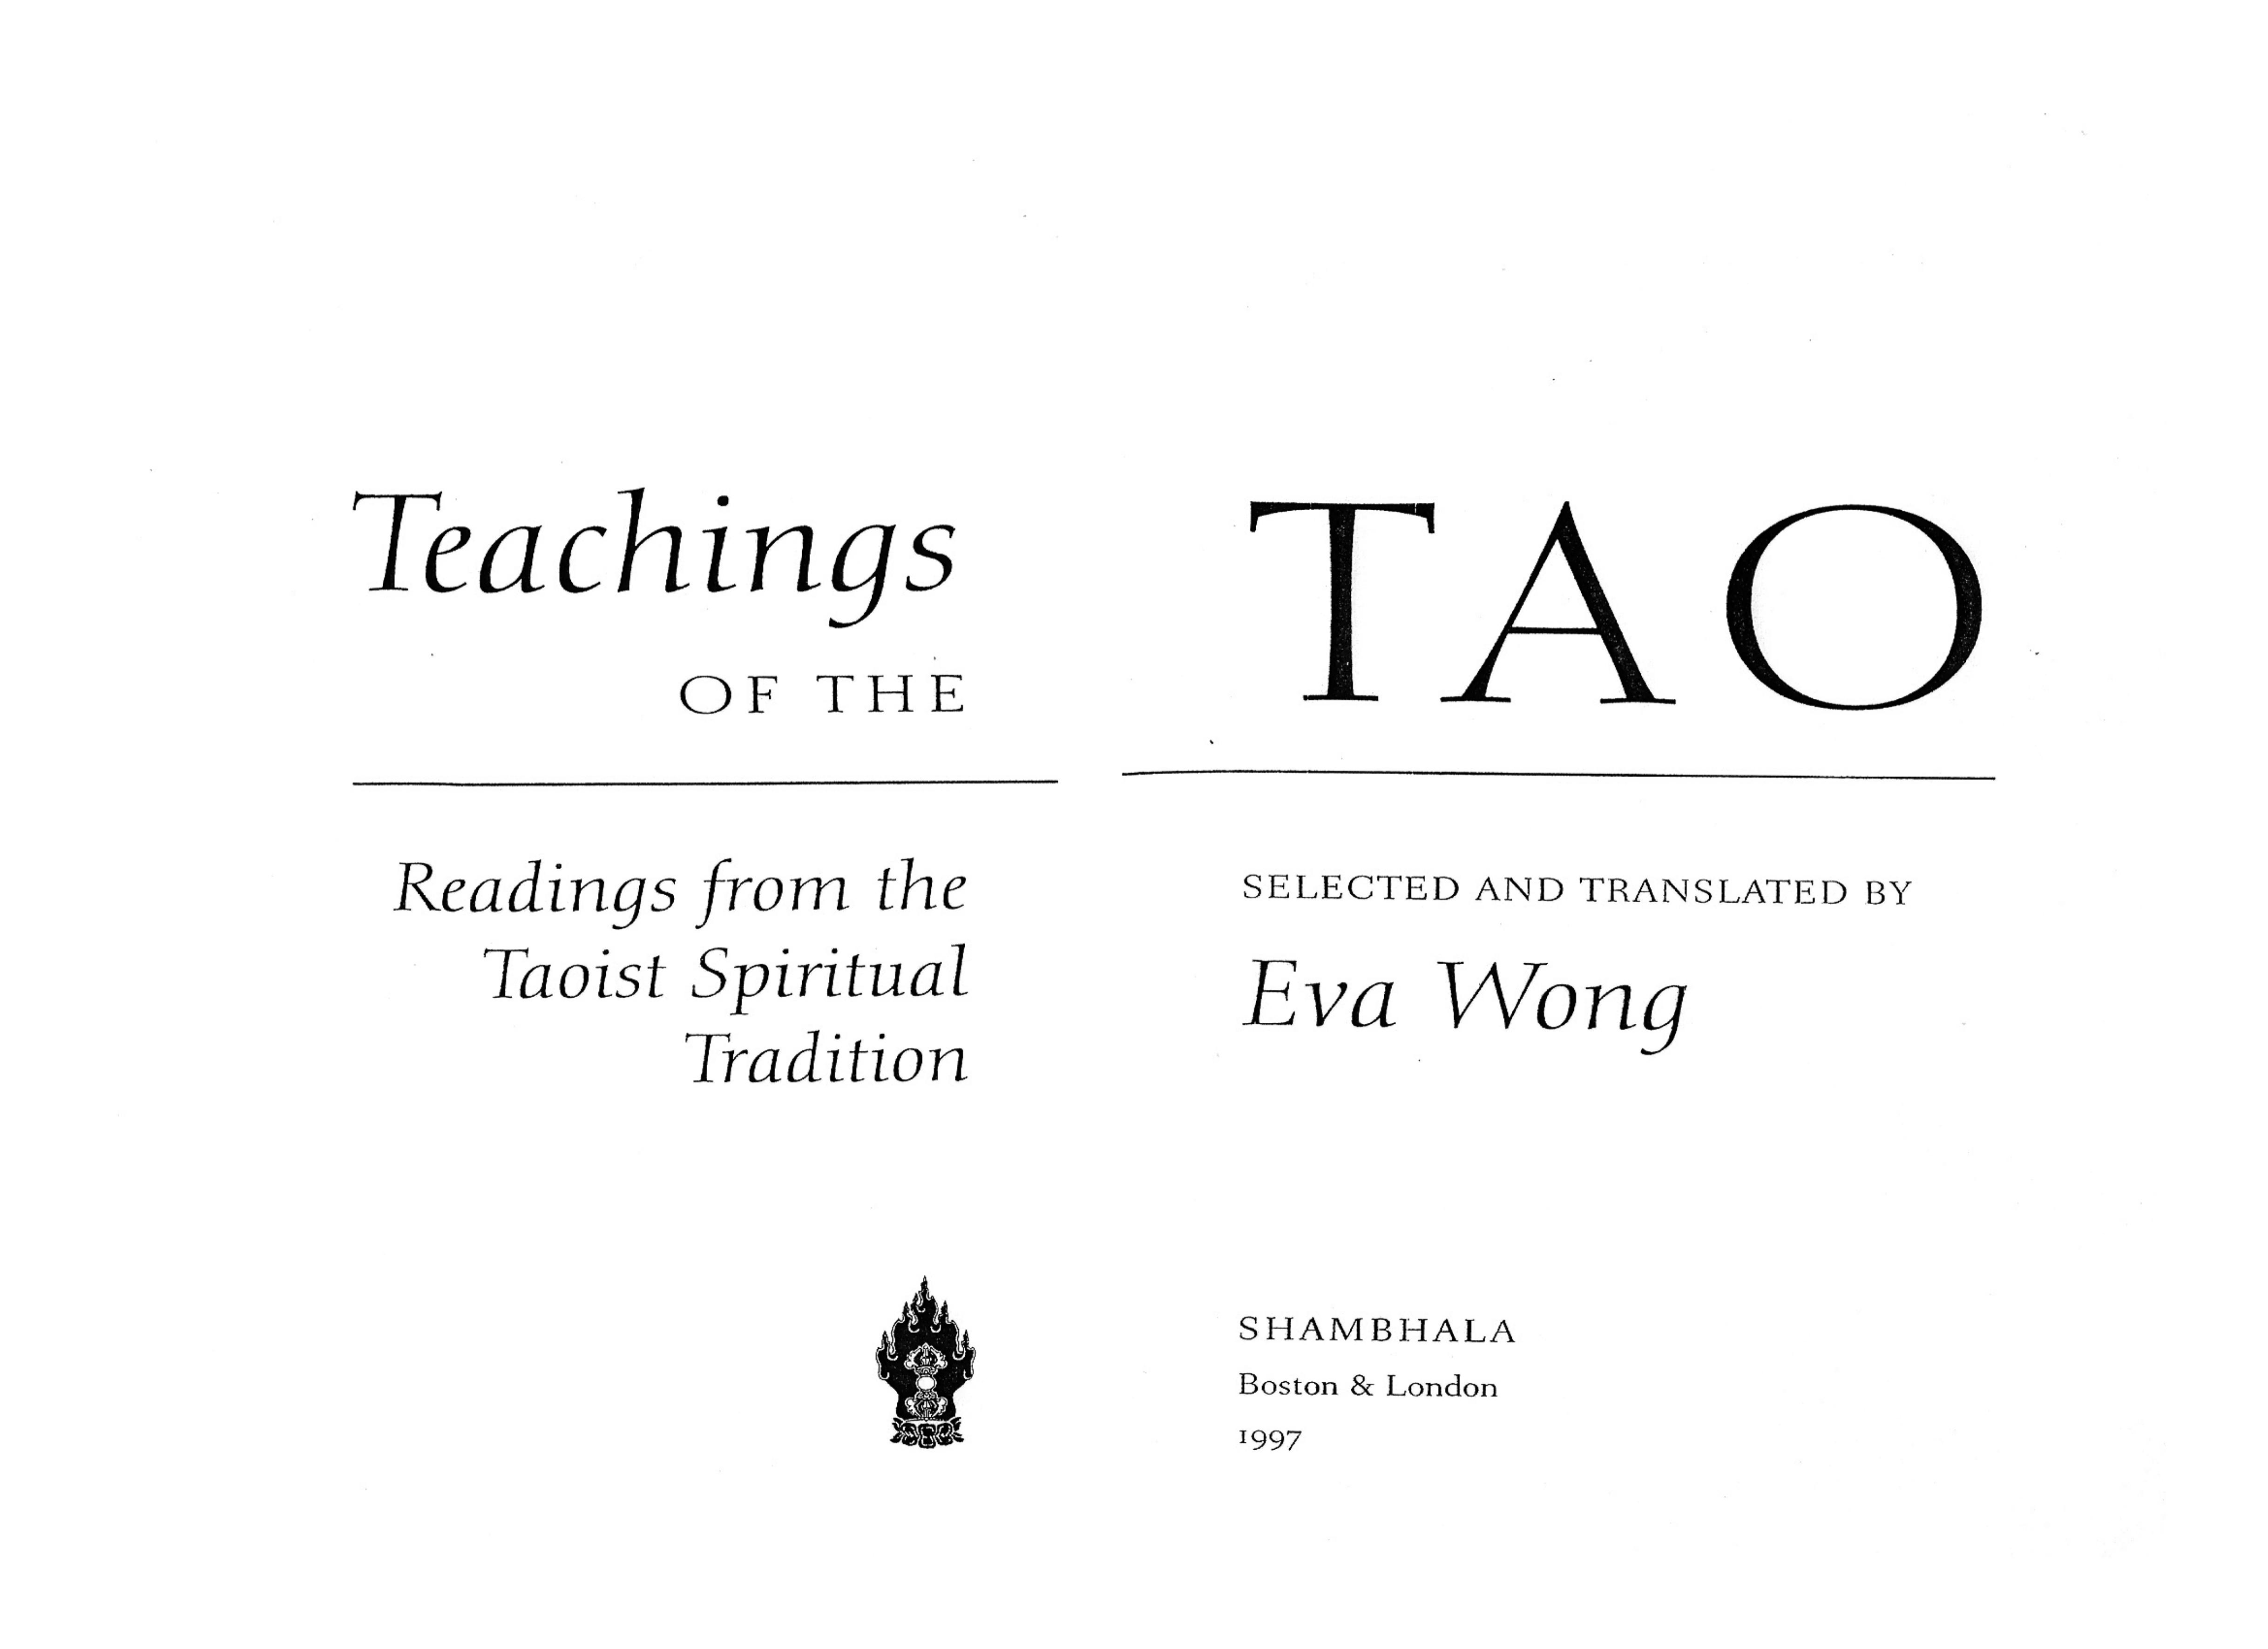 Teachings of the Tao by Eva Wong